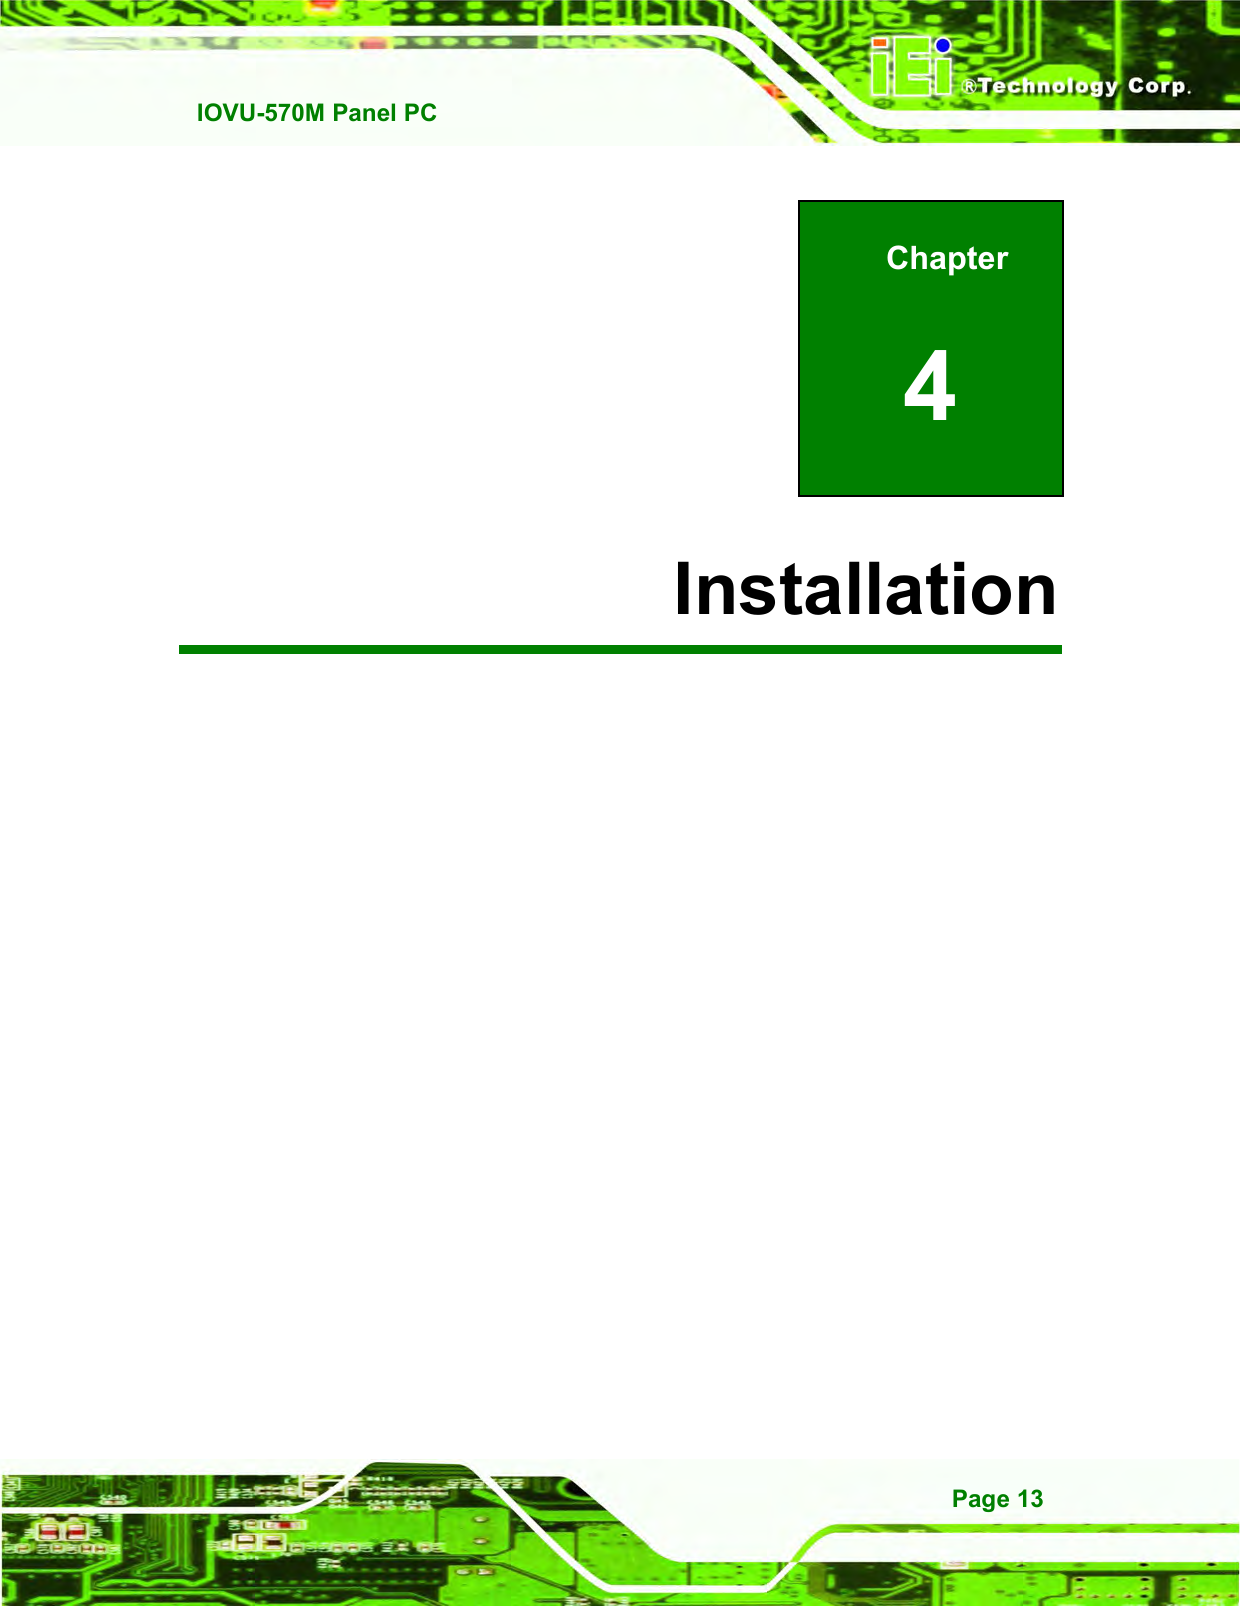   IOVU-570M Panel PC Page 13     Chapter 4 4 Installation 